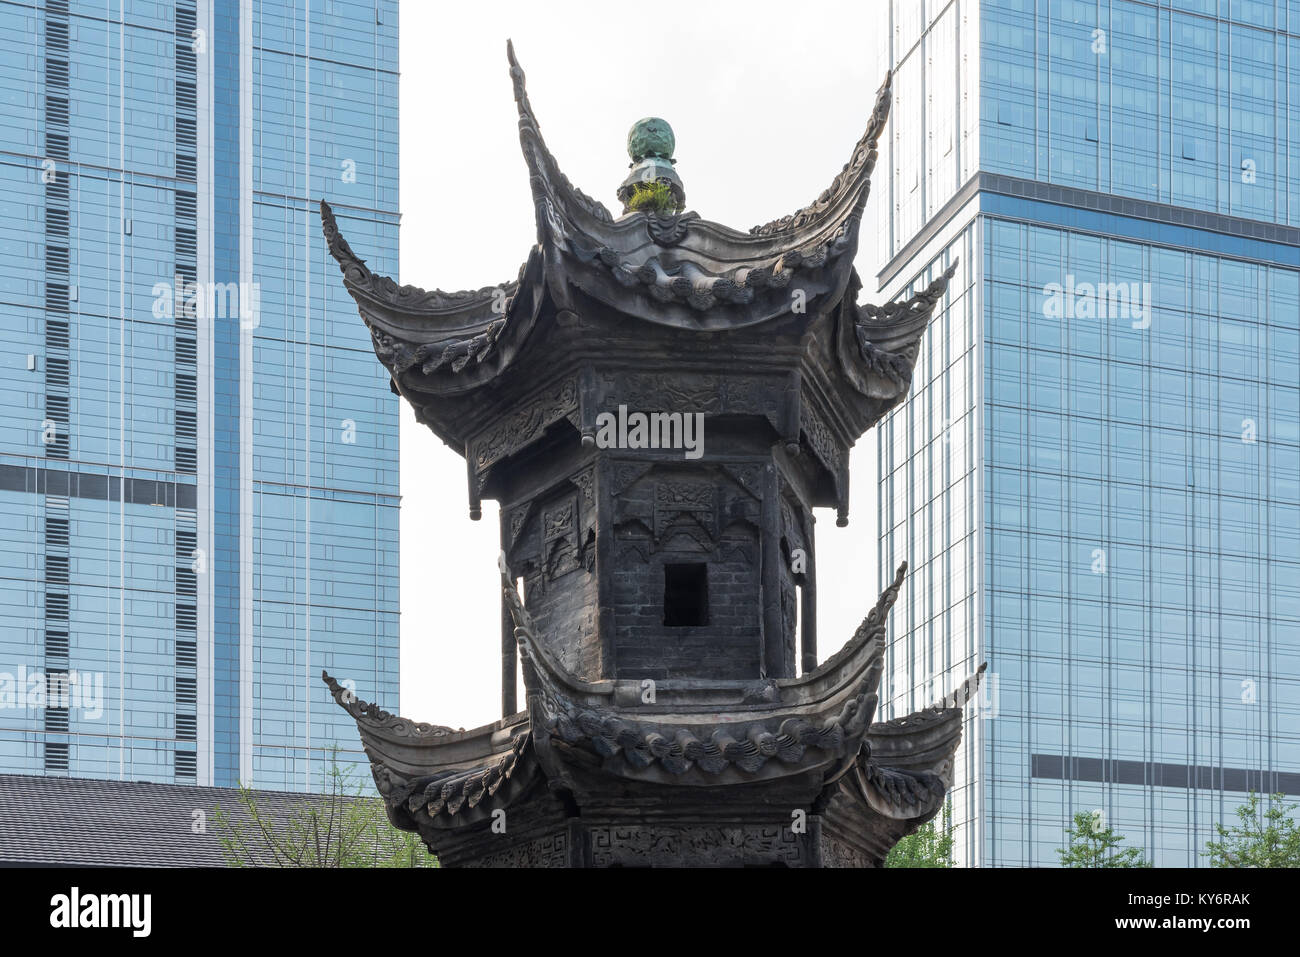 61 Chengdu Taikooli Images, Stock Photos, 3D objects, & Vectors